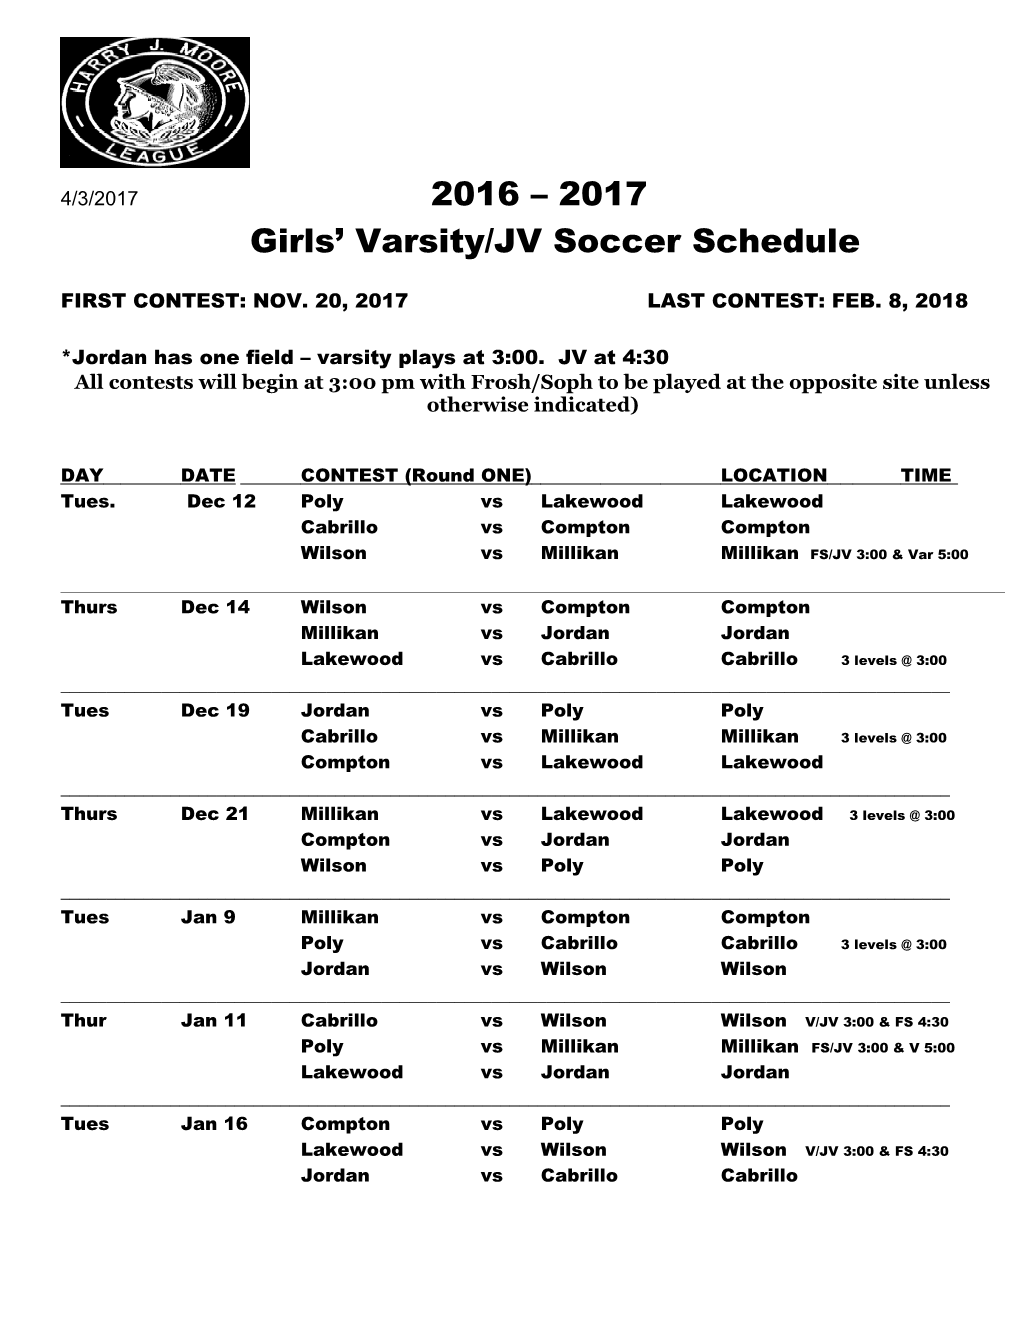 Girls Varsity/JV Soccer Schedule